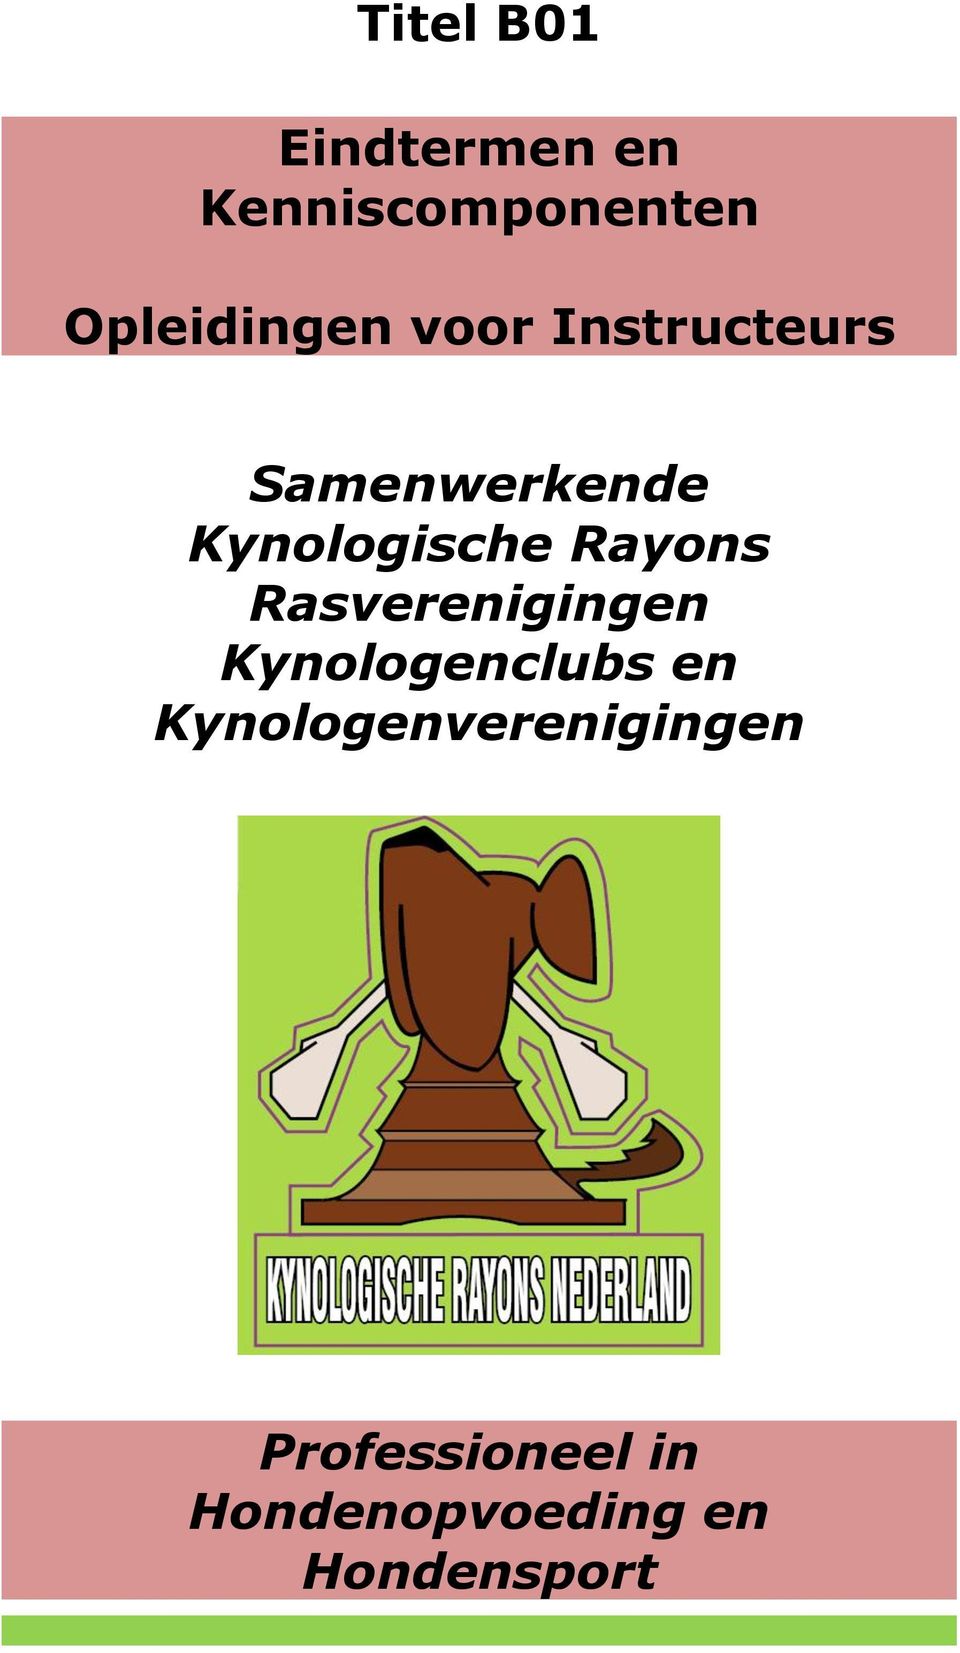 ynologische Rayons Rasverenigingen ynologenclubs en